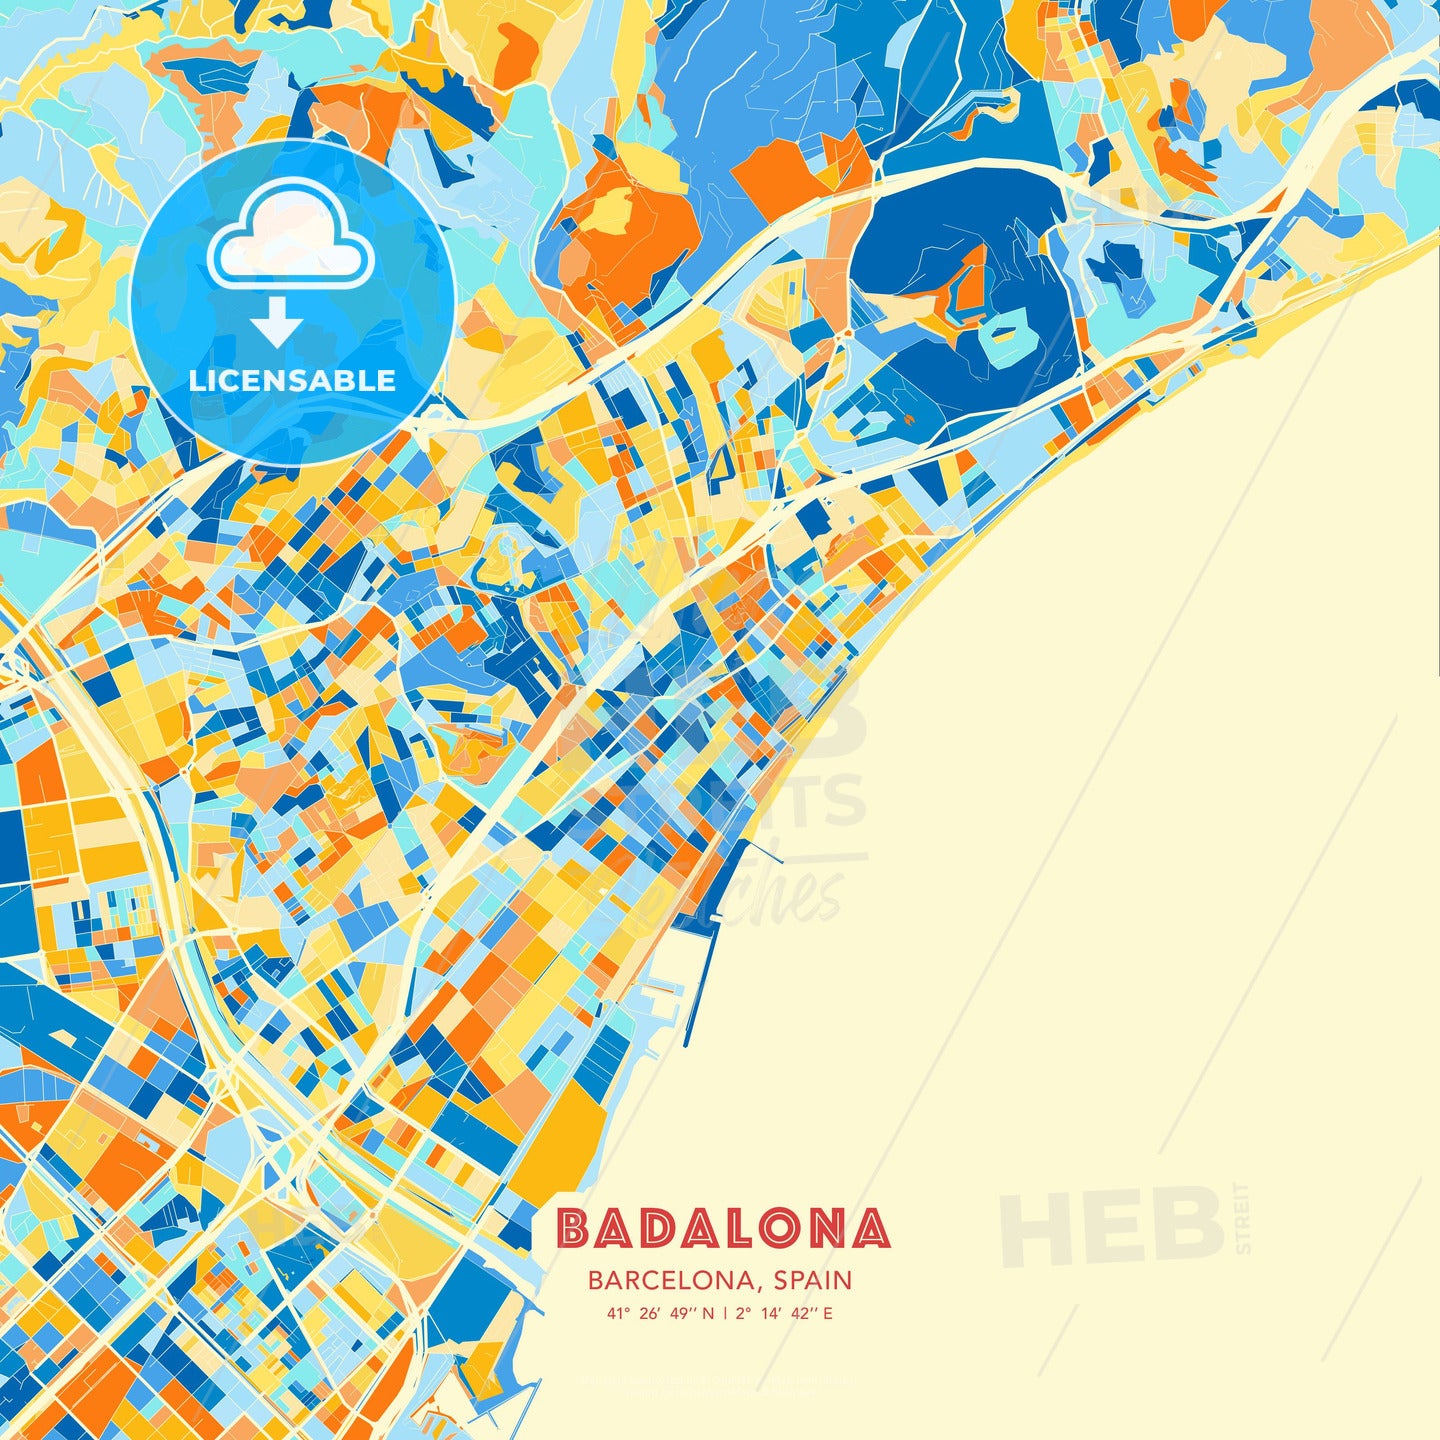 Badalona, Barcelona, Spain, map - HEBSTREITS Sketches